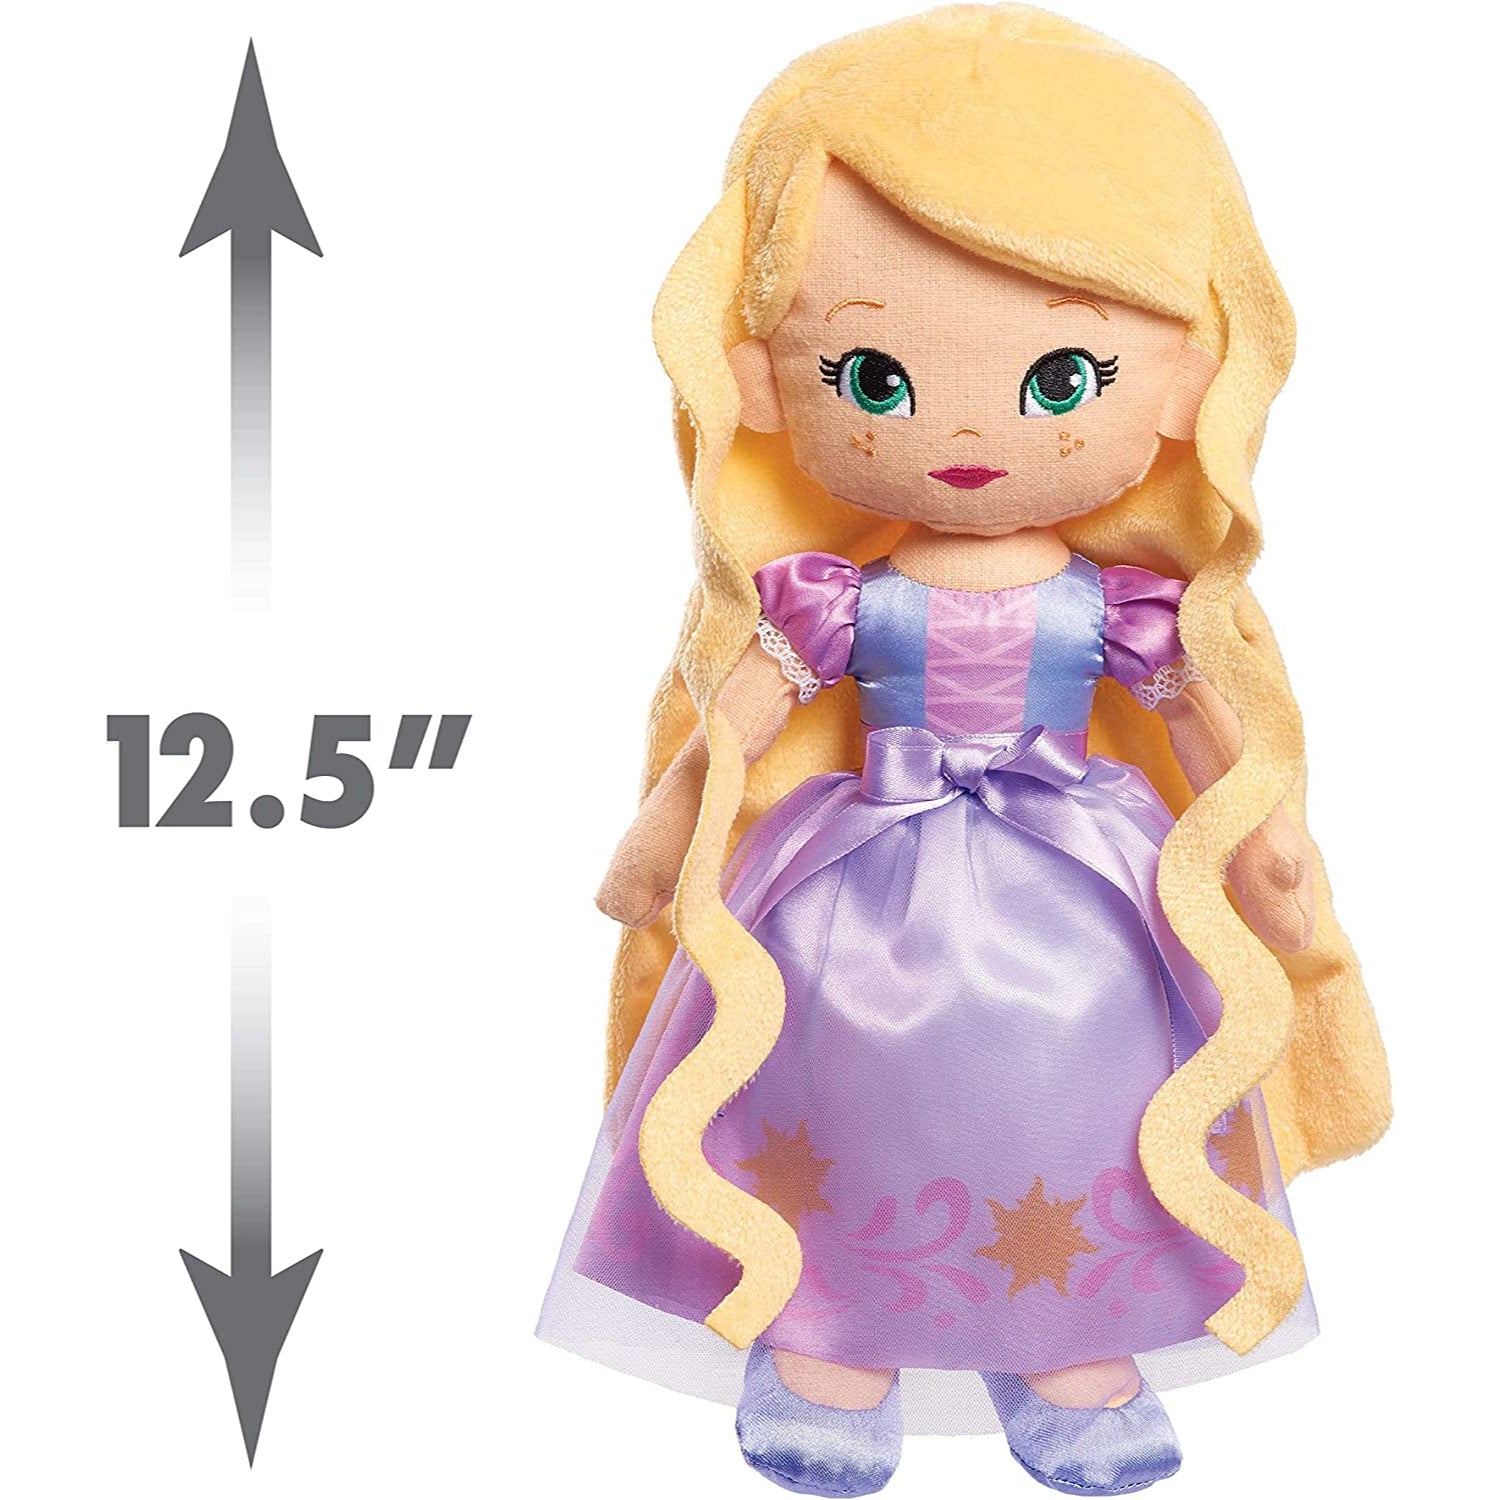 Just Play Disney Princess So Sweet Princess Rapunzel, 12.5 Inch Plush with Blonde Hair, Tangled